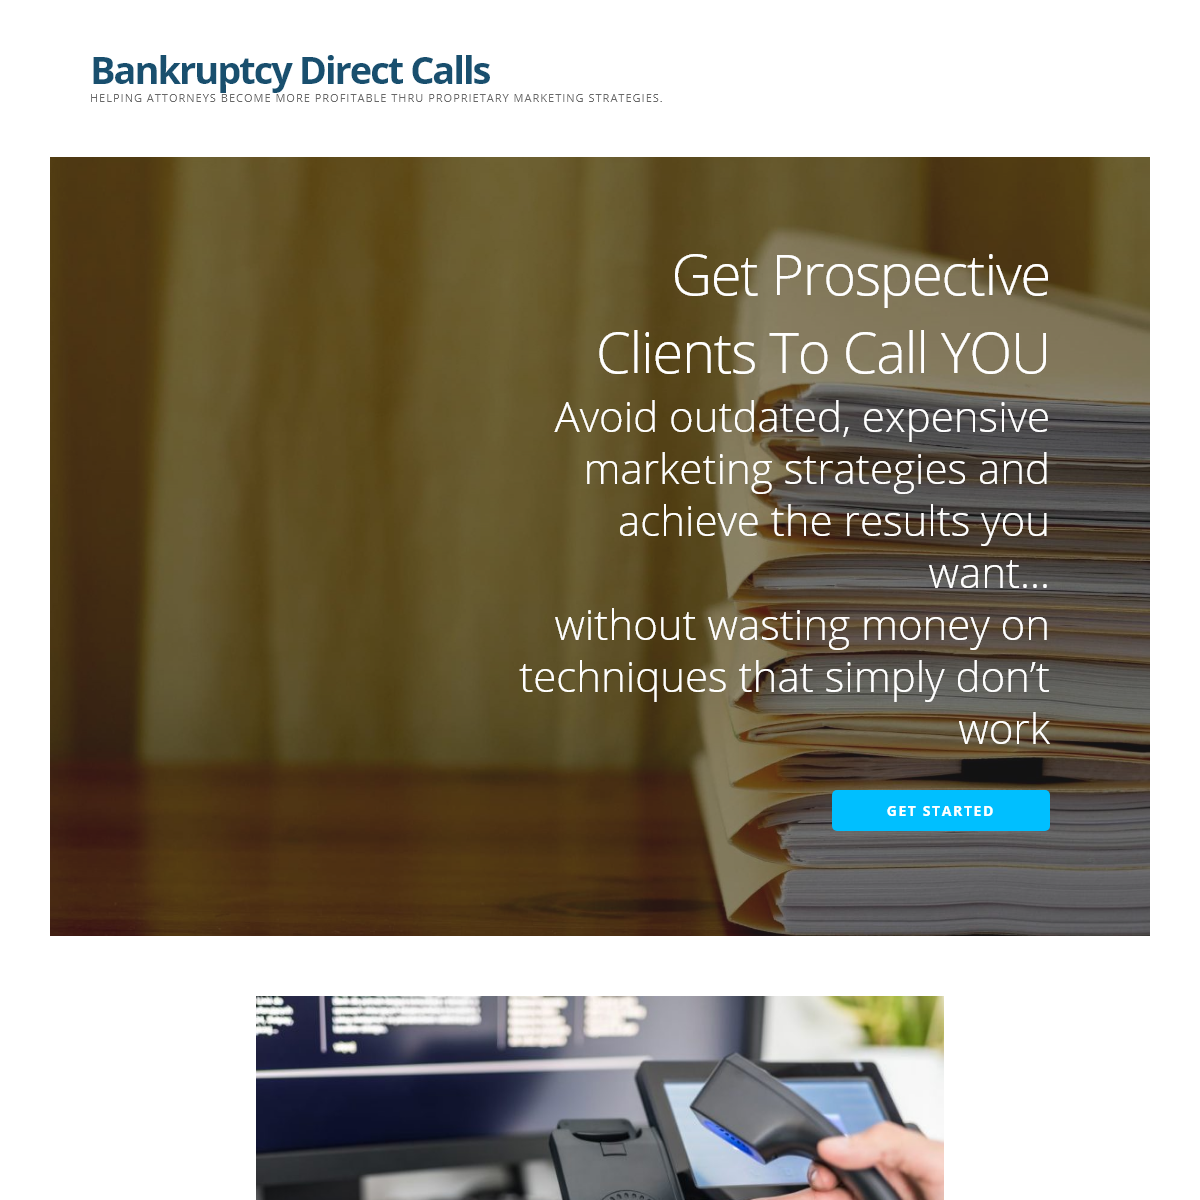 A complete backup of bankruptcydirectcalls.com